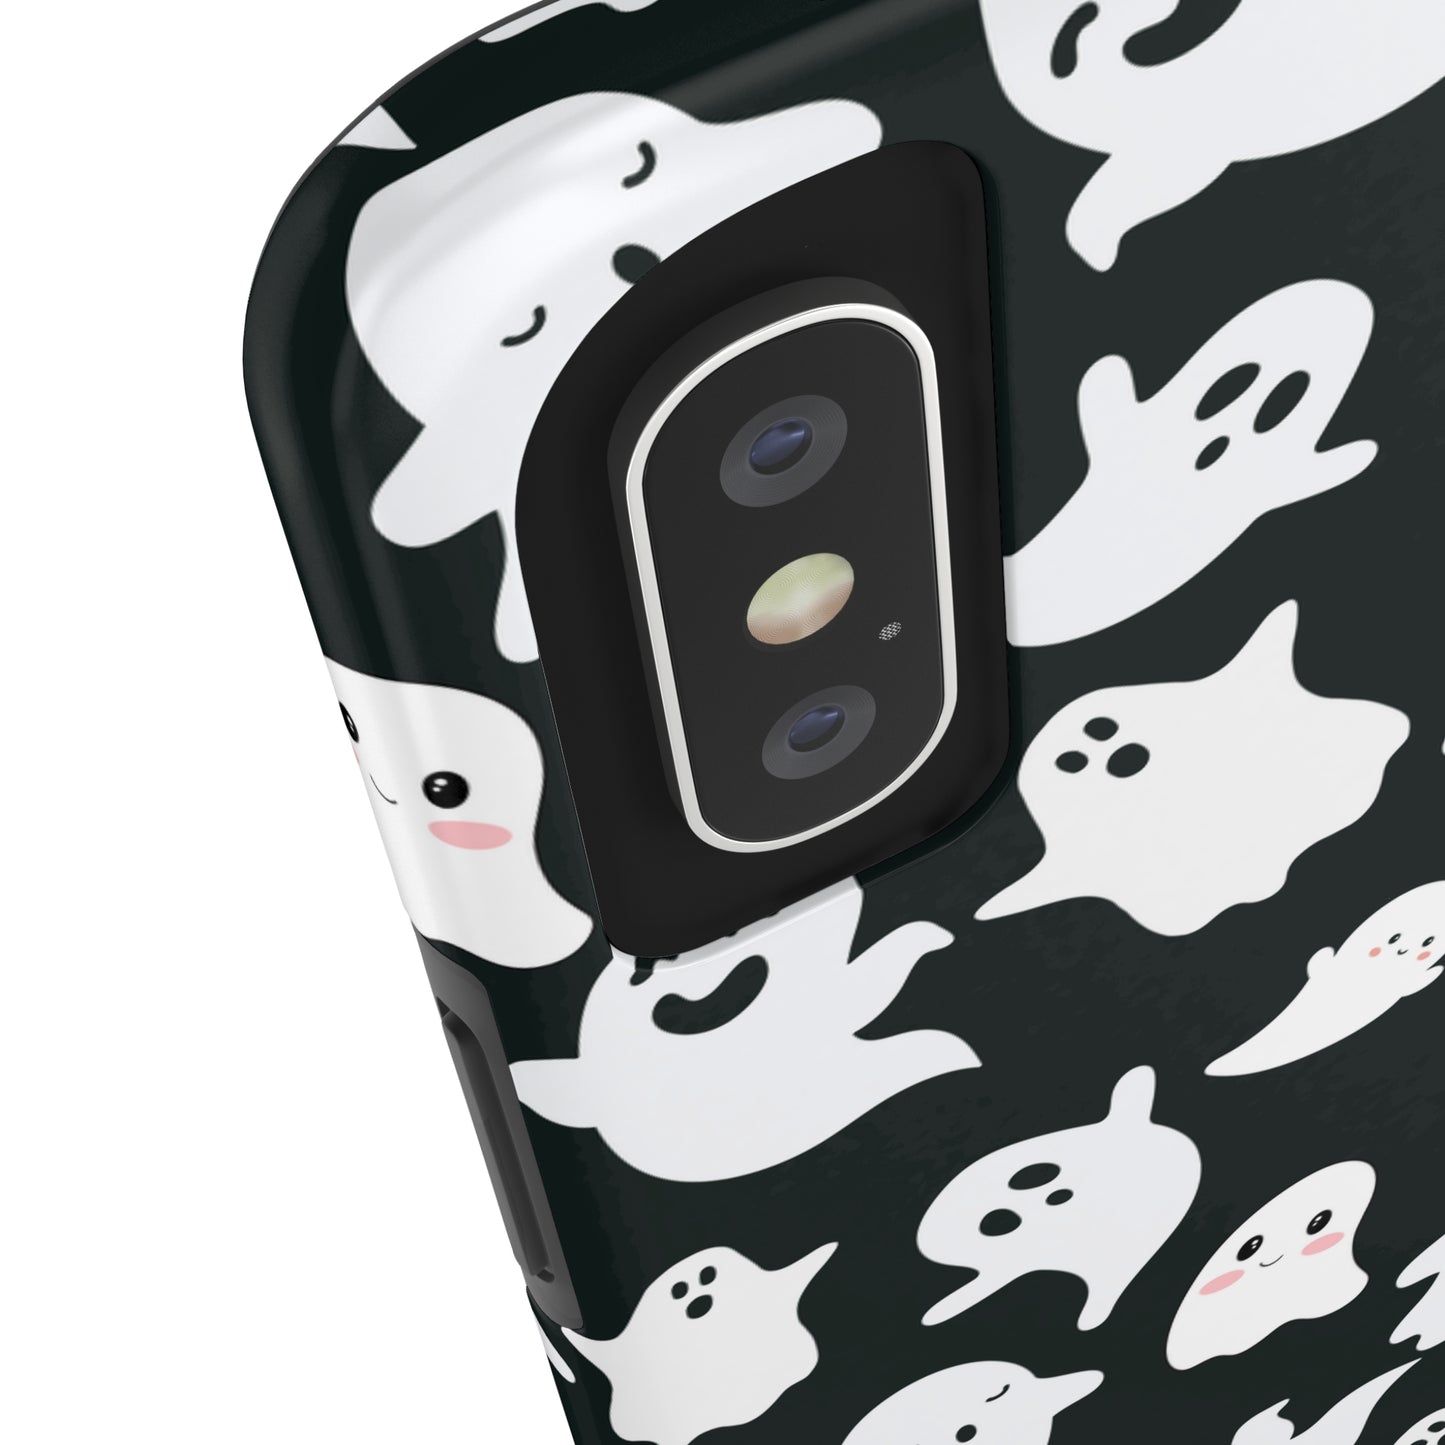 Halloween Phone Case / Ghost Iphone Case